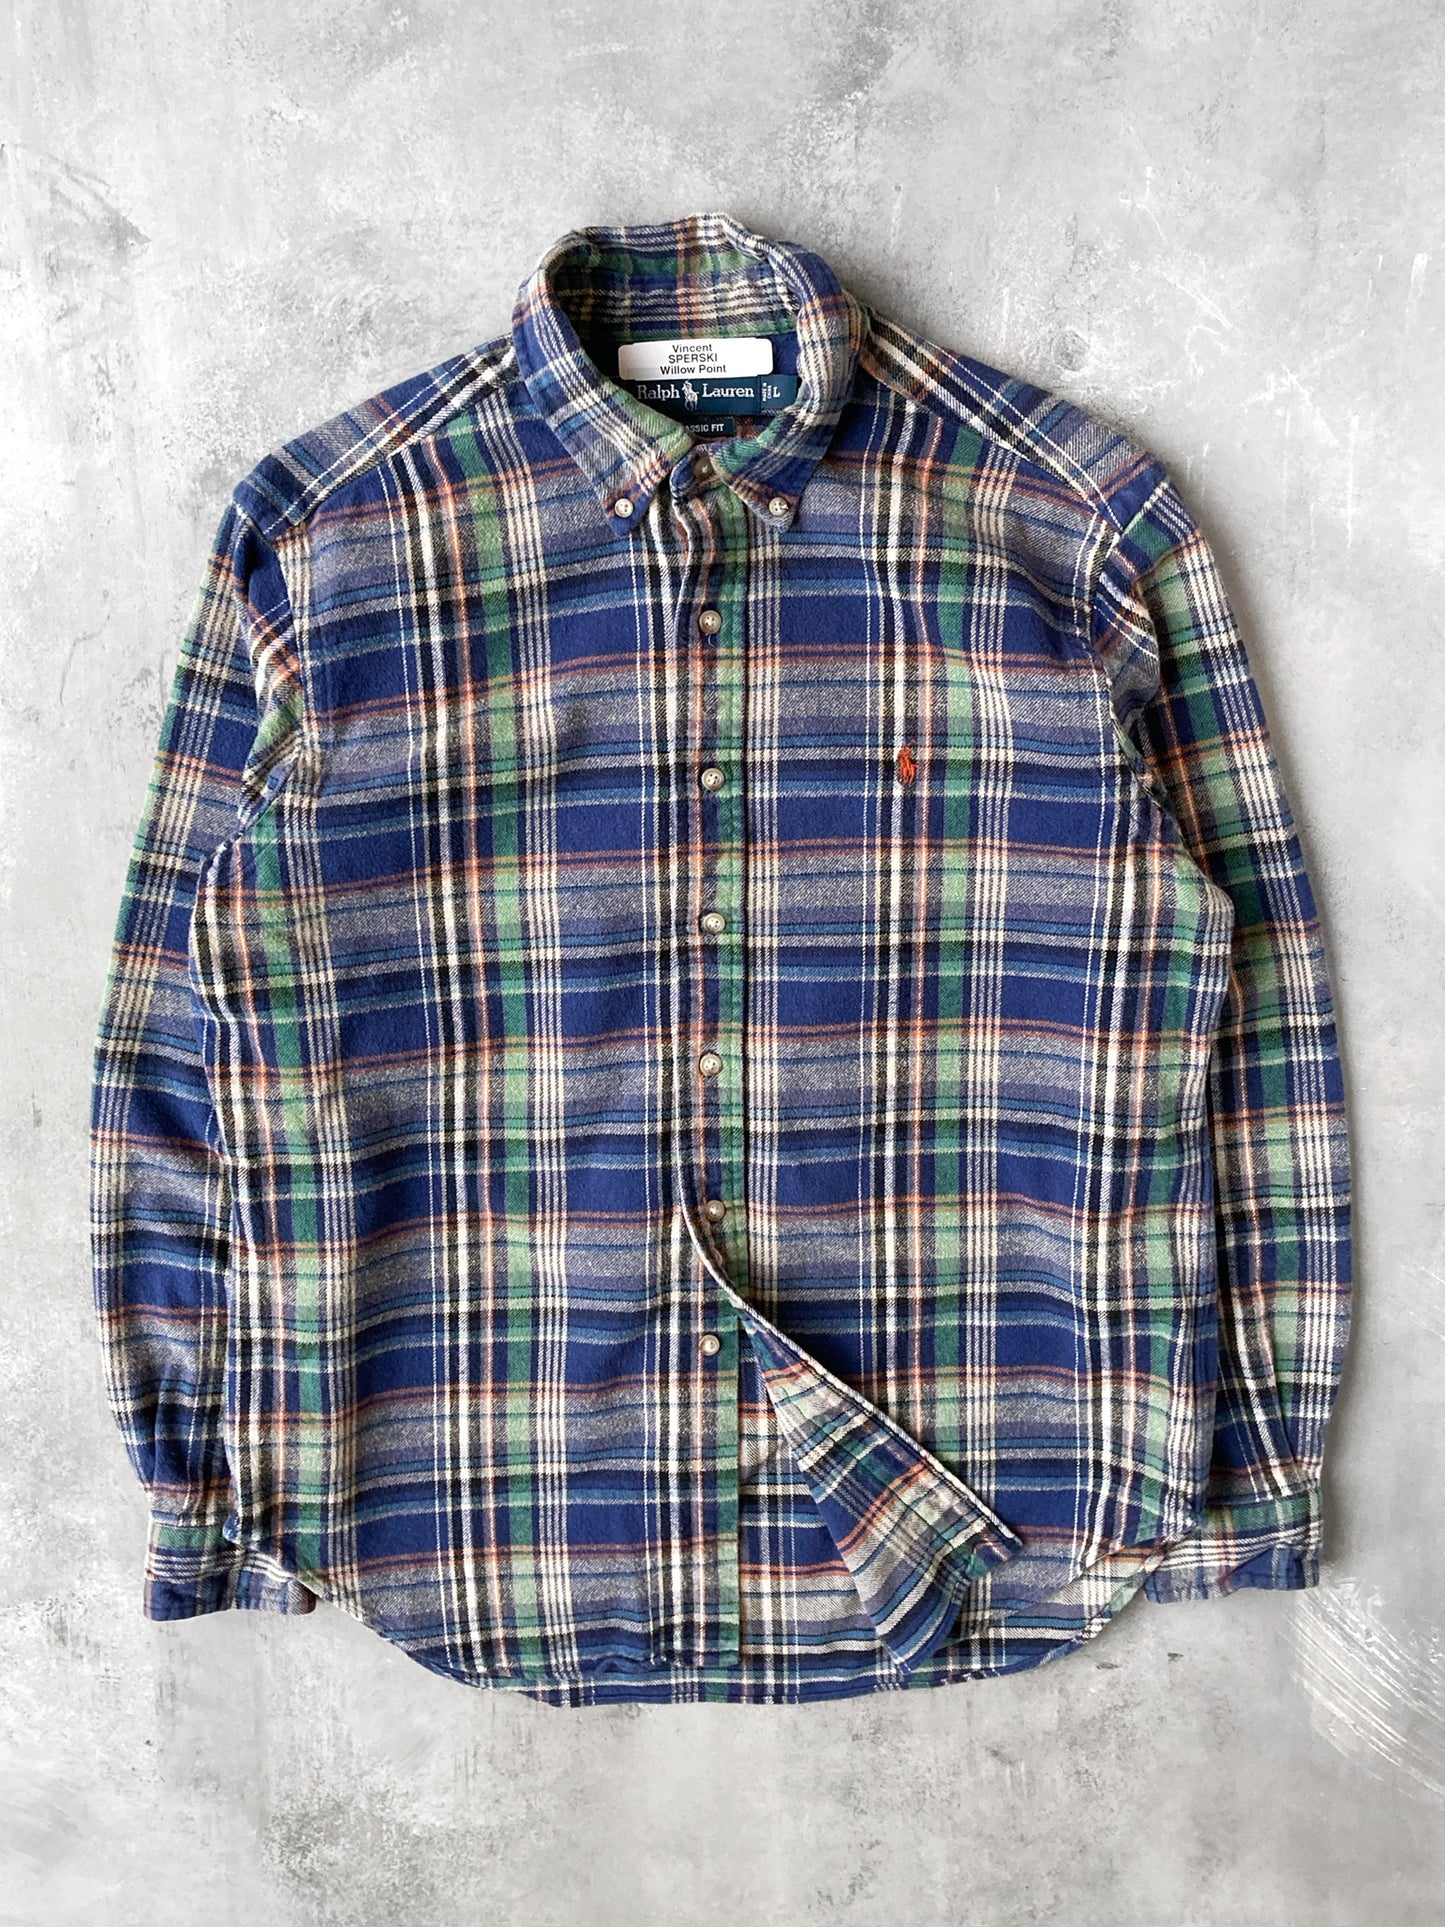 Ralph Lauren Flannel Shirt 90's - Large